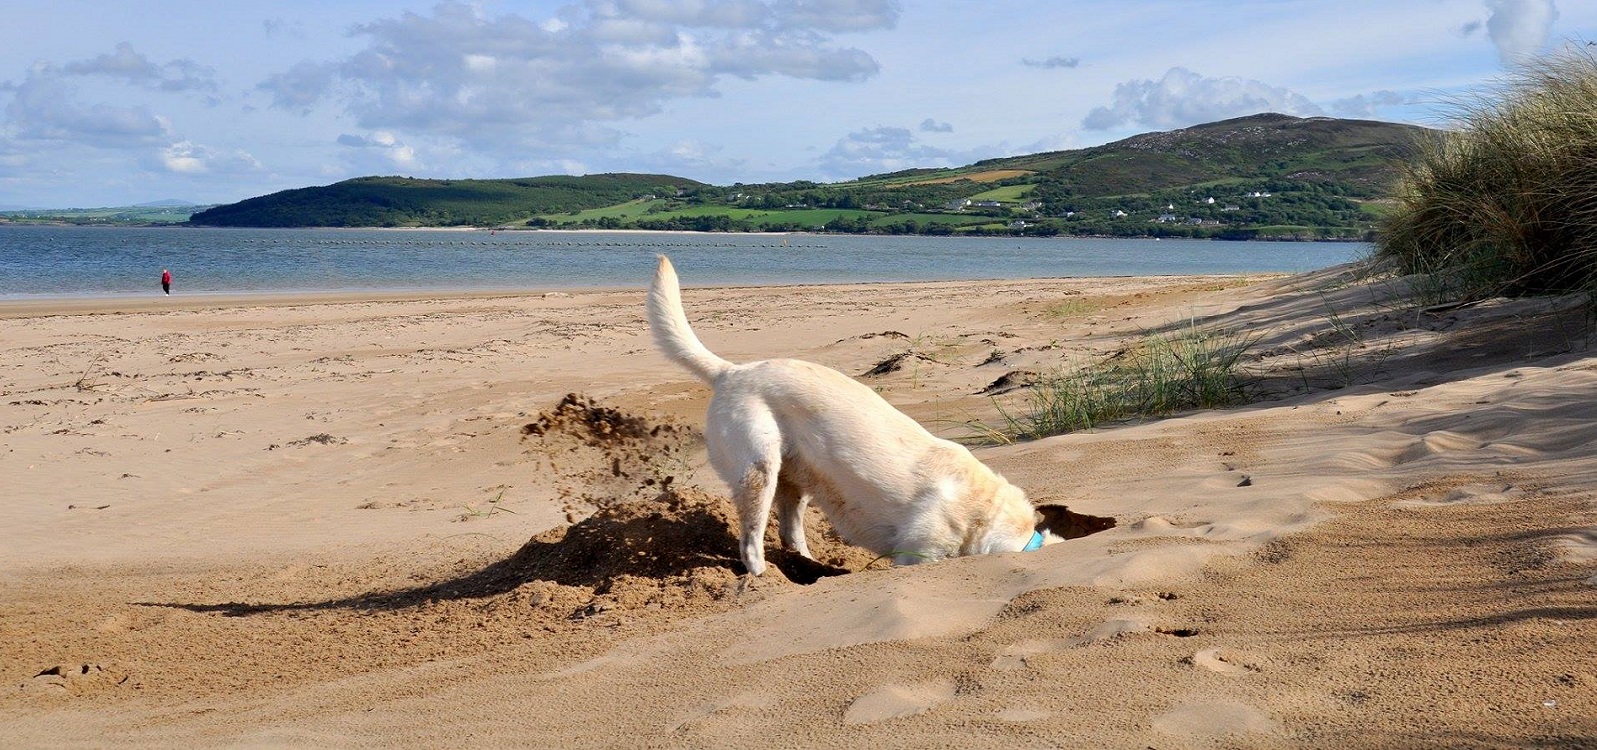 Rathmullan House Dog on Beach